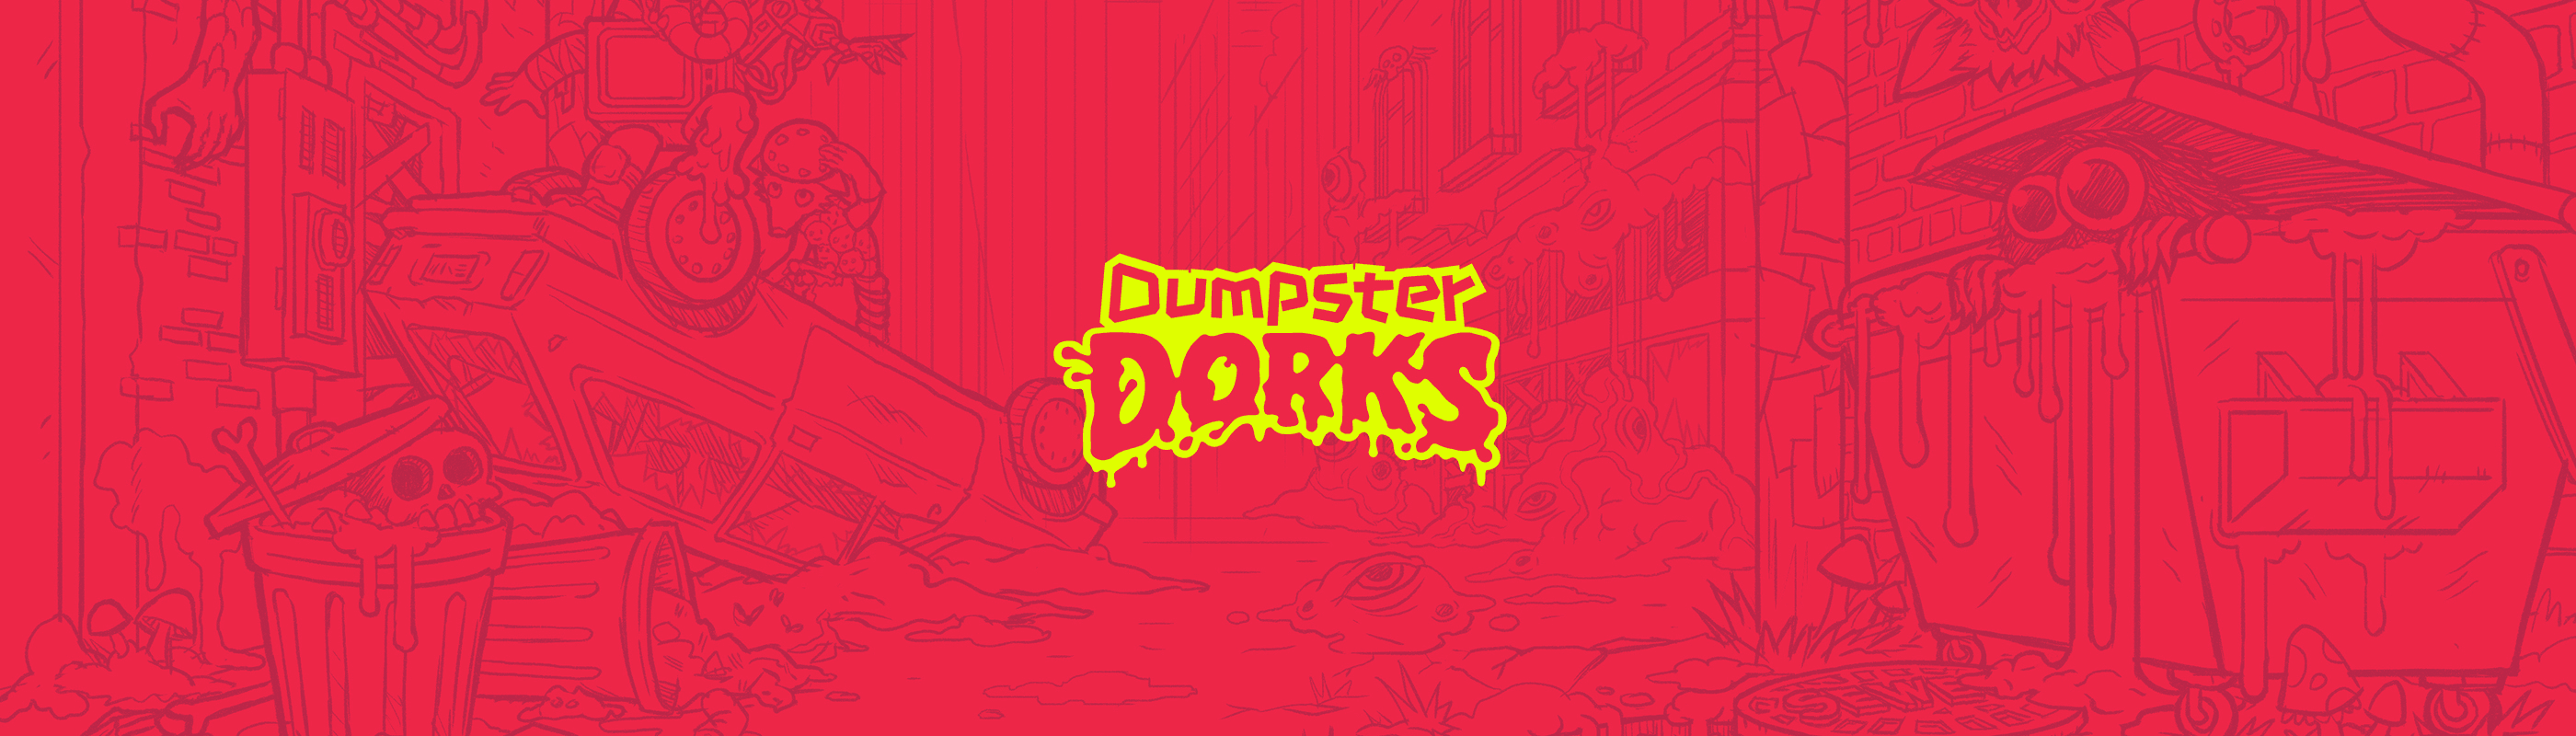 DumpsterDorks banner